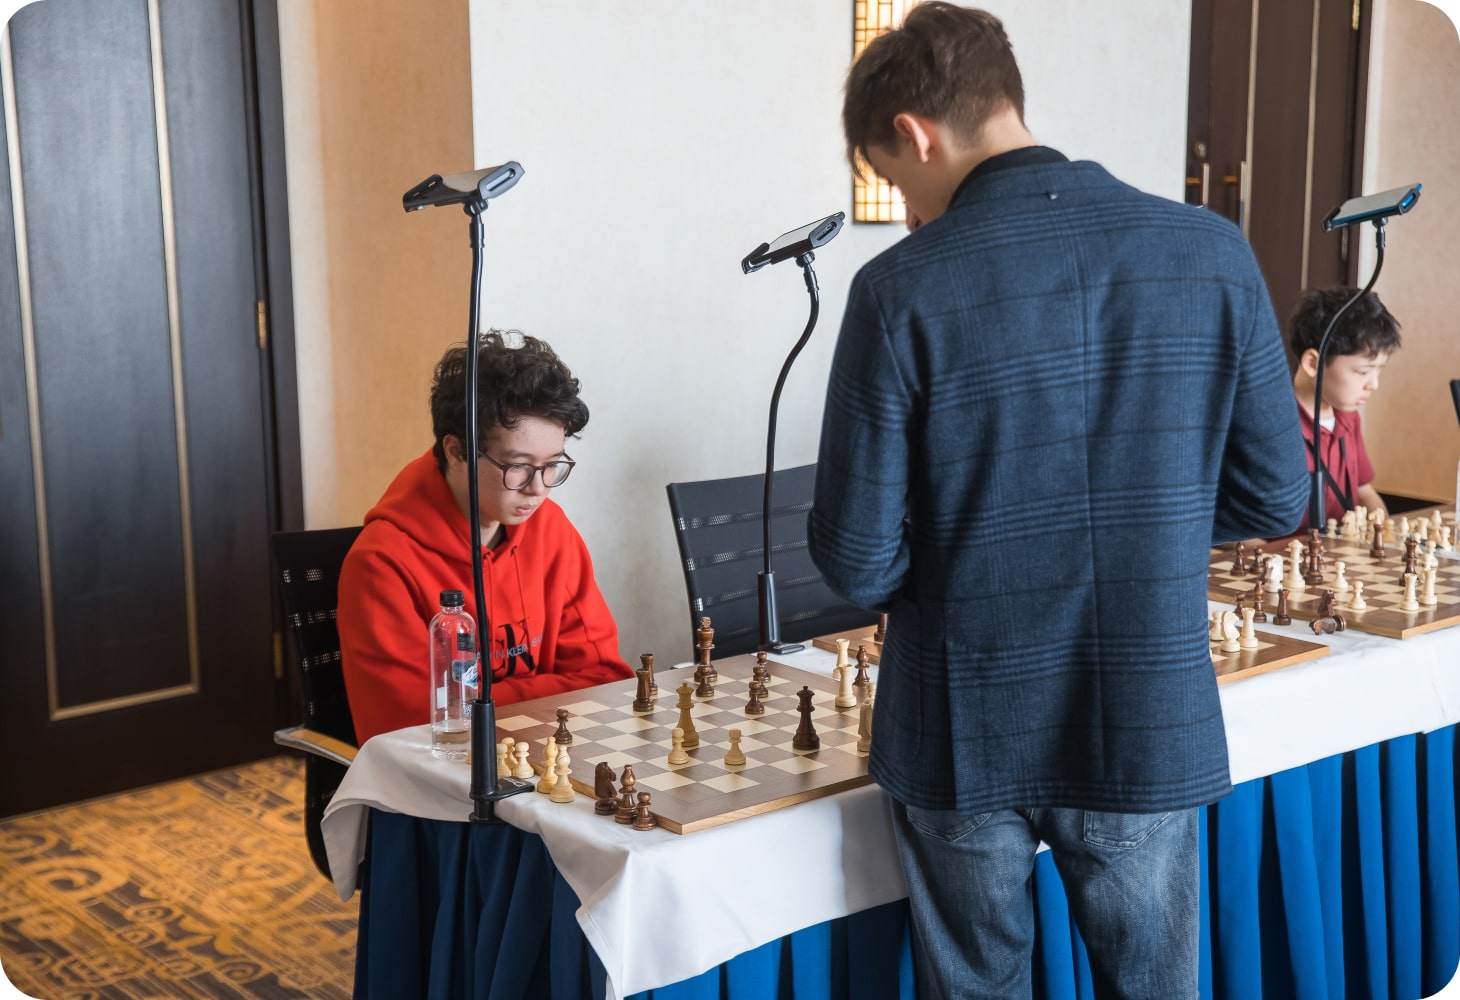 The chess games of Daniil Dubov